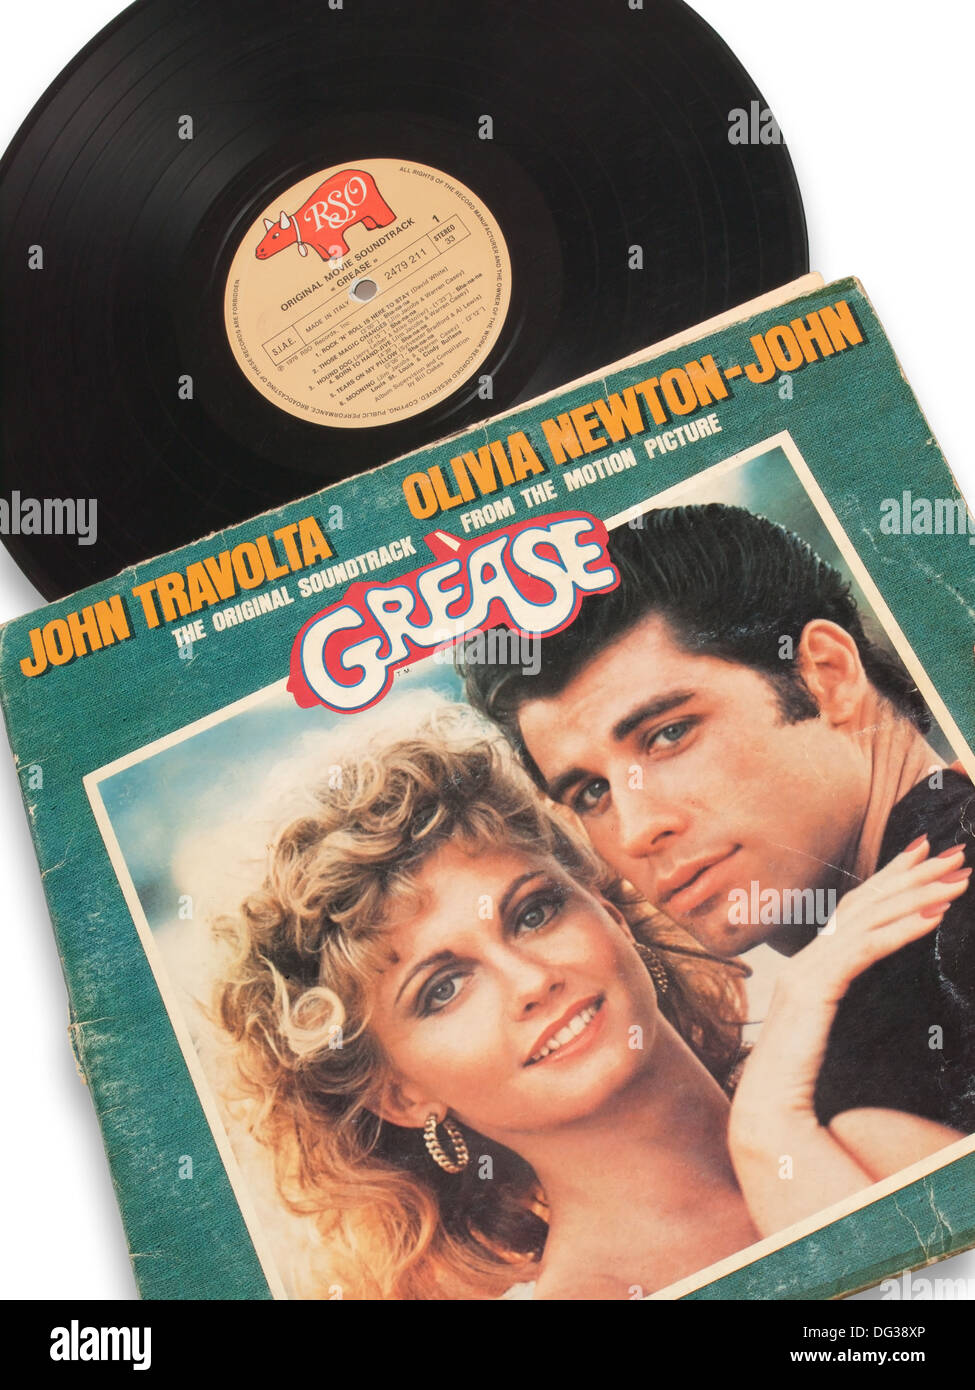 album vinyl record of grease- John Travolta Stock Photo